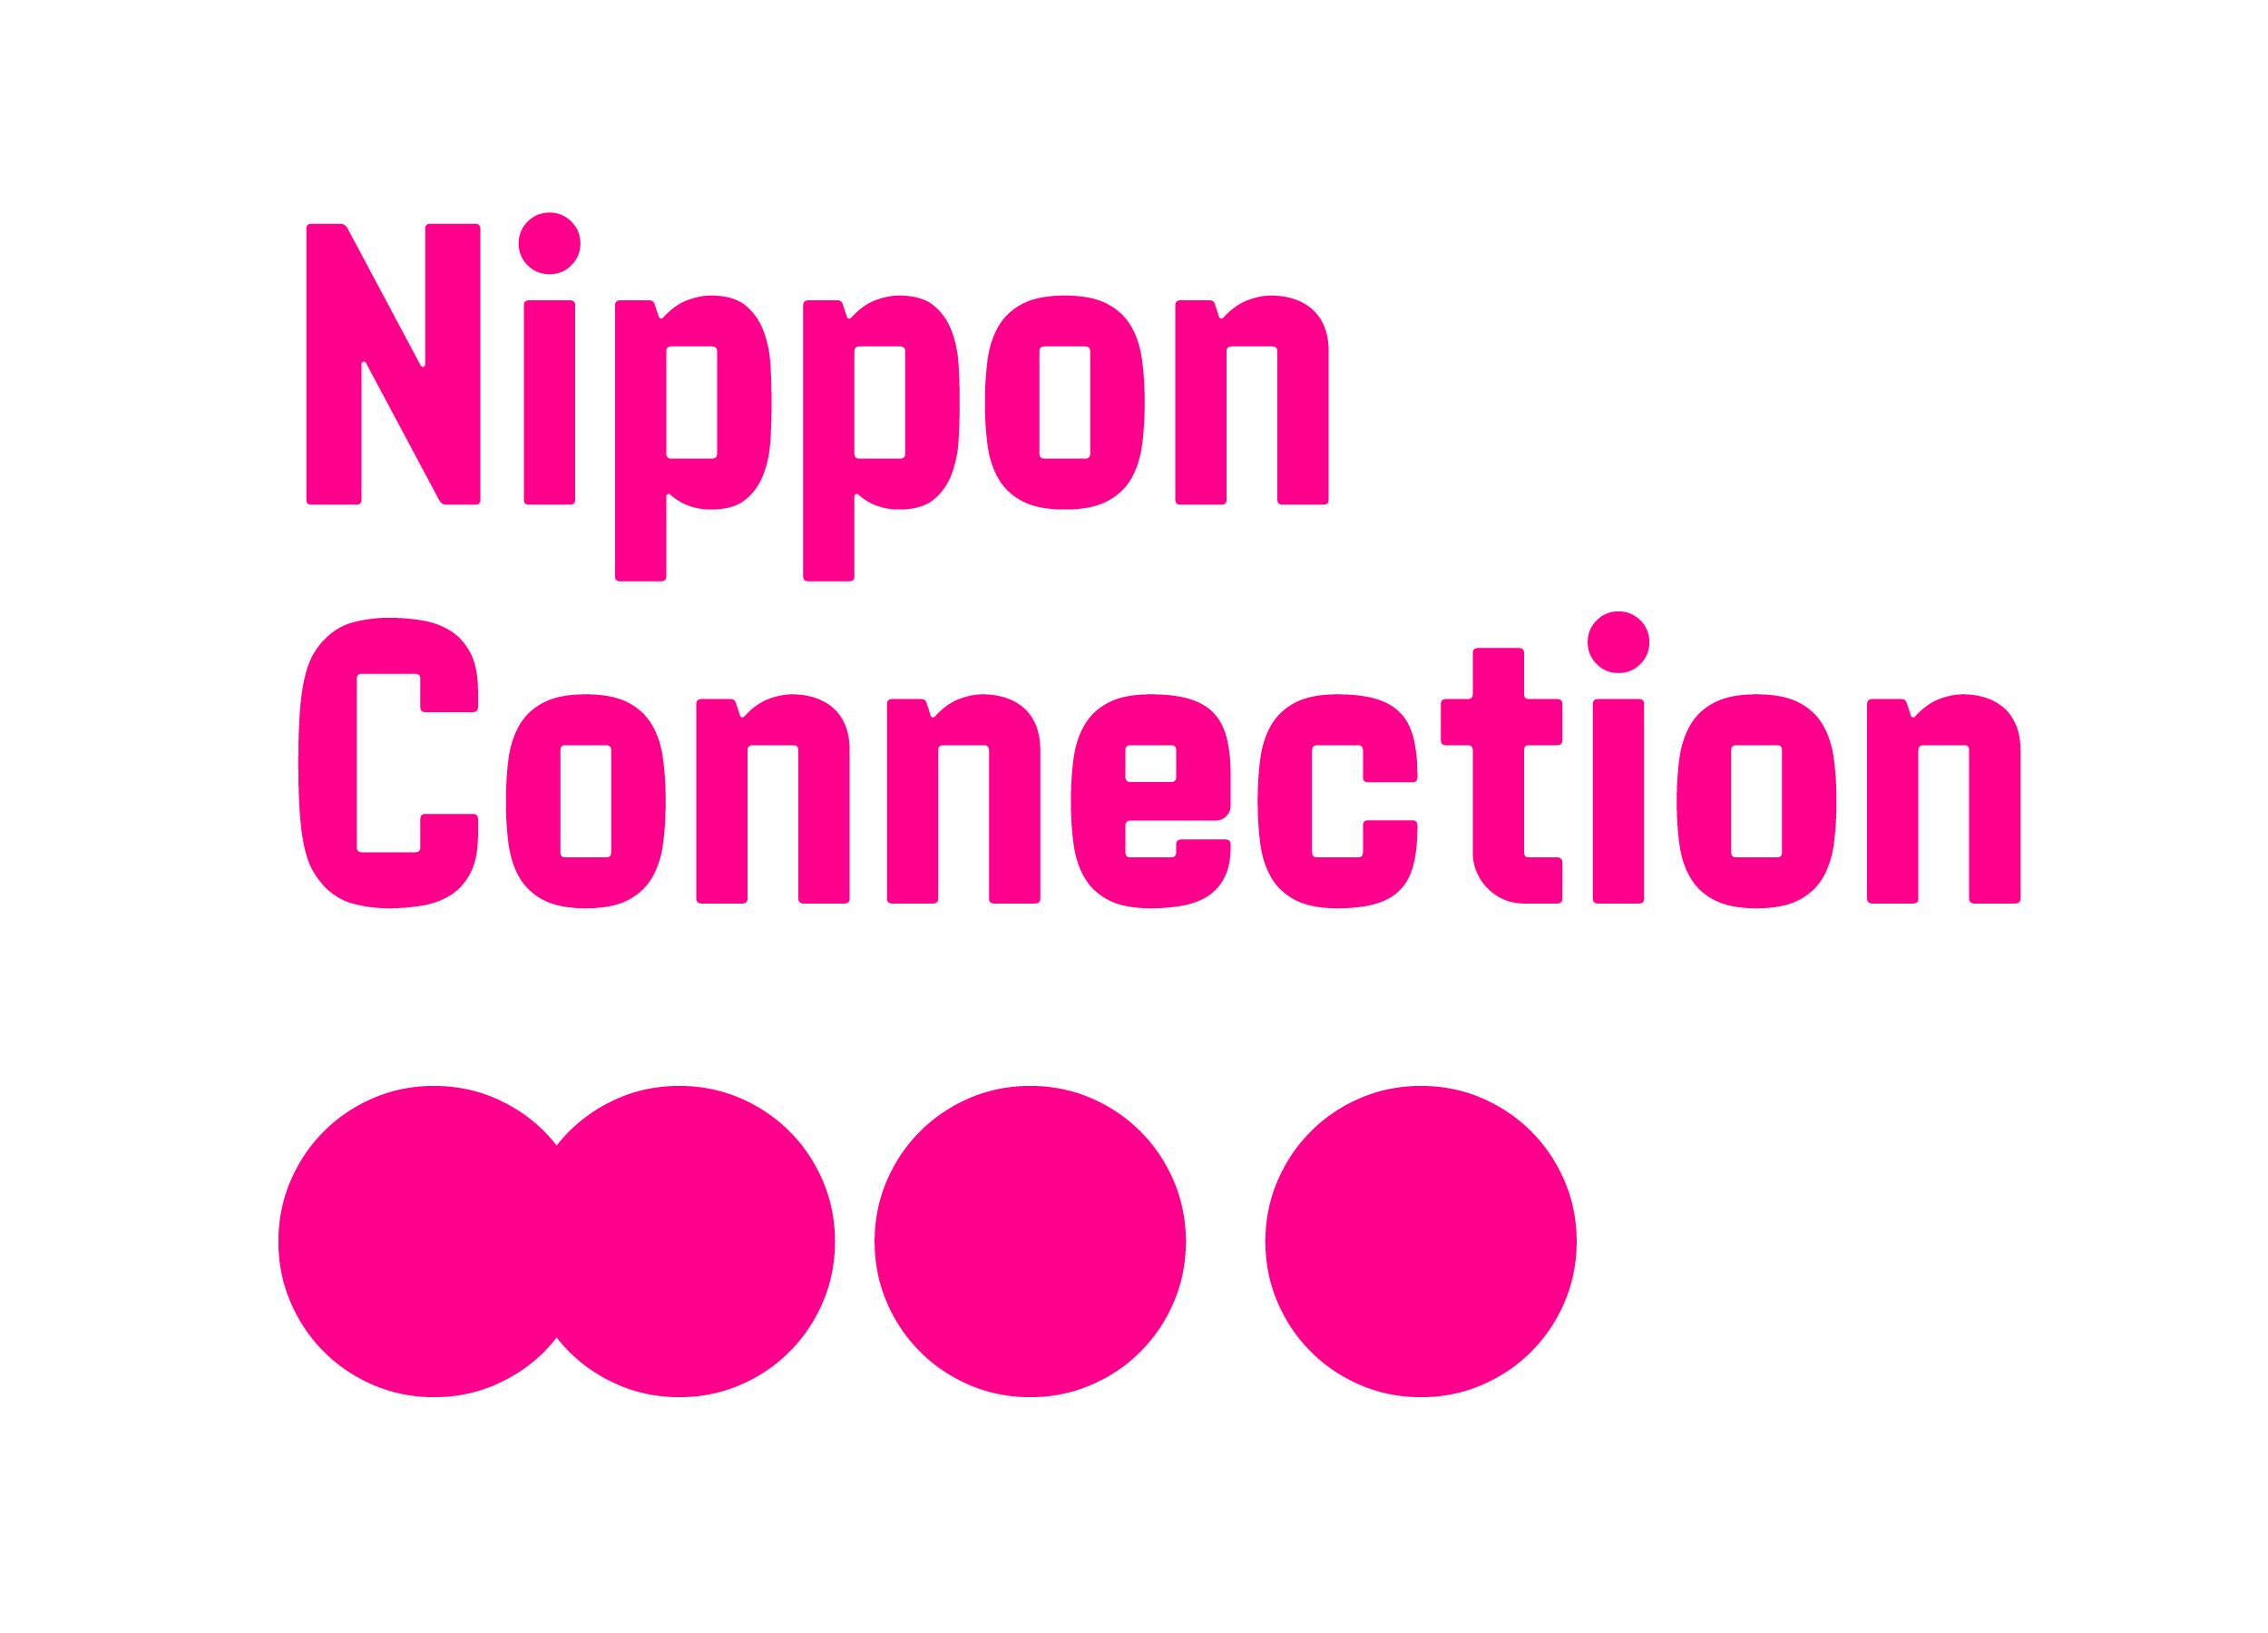 TOKYO UBER BLUES von Taku Aoyagi beim Nippon Connection Film Festival in Frankfurt